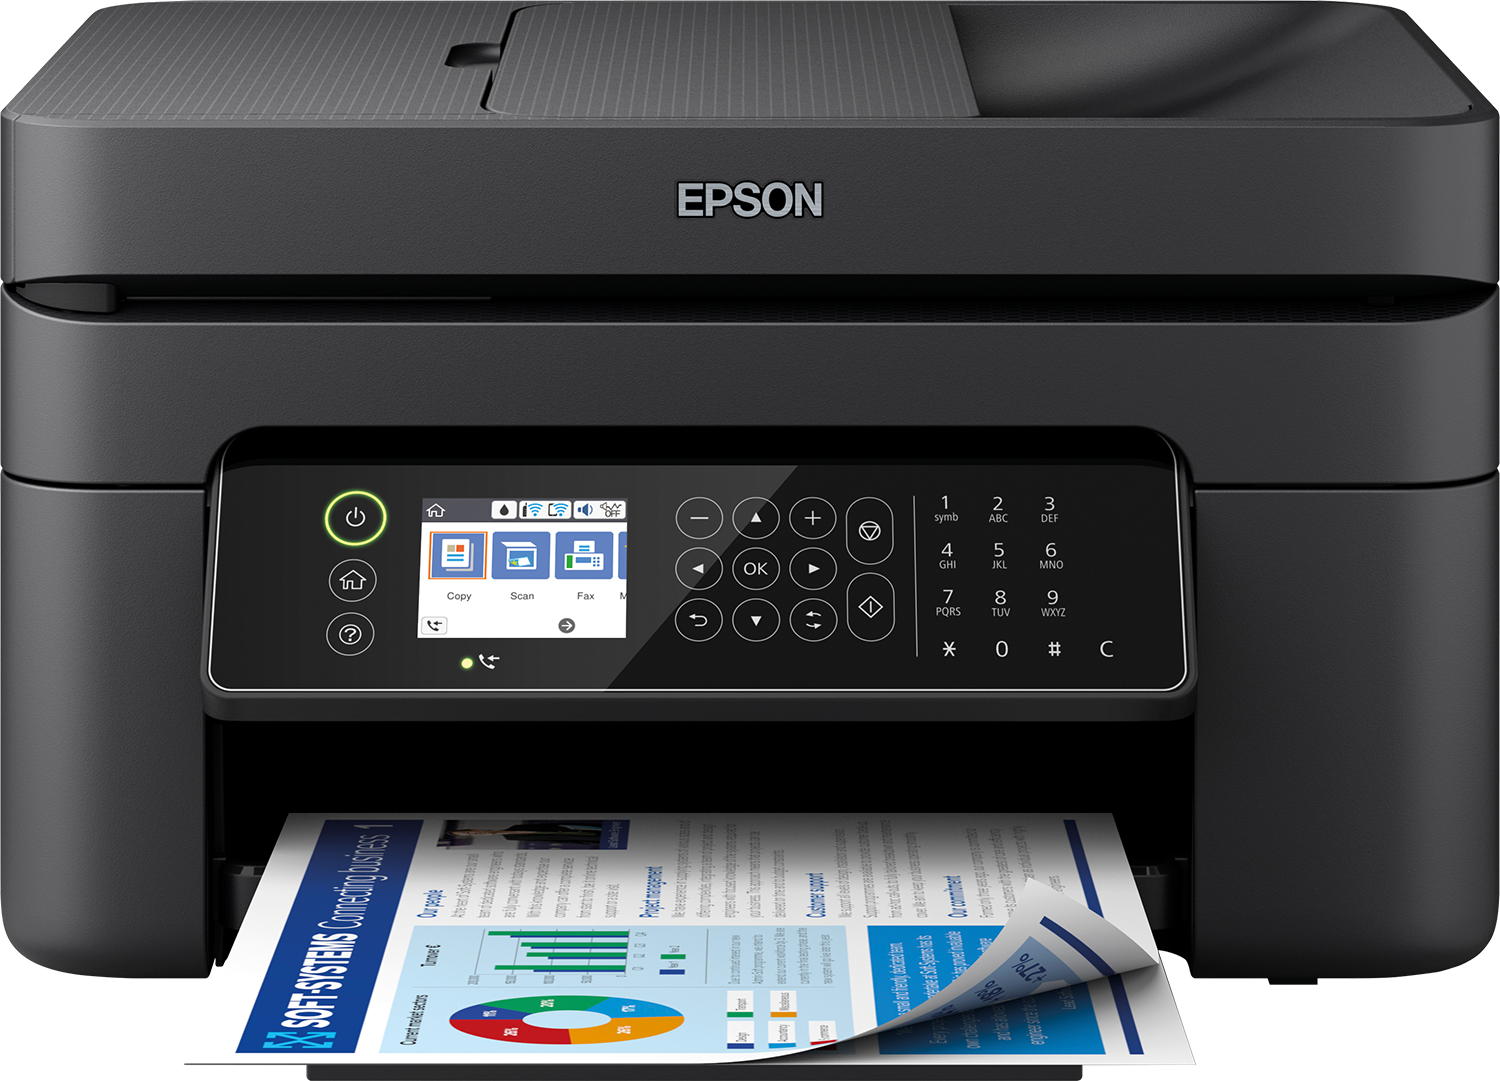 Epson WorkForce WF-2810 Multifunction Printer [Discontinued]